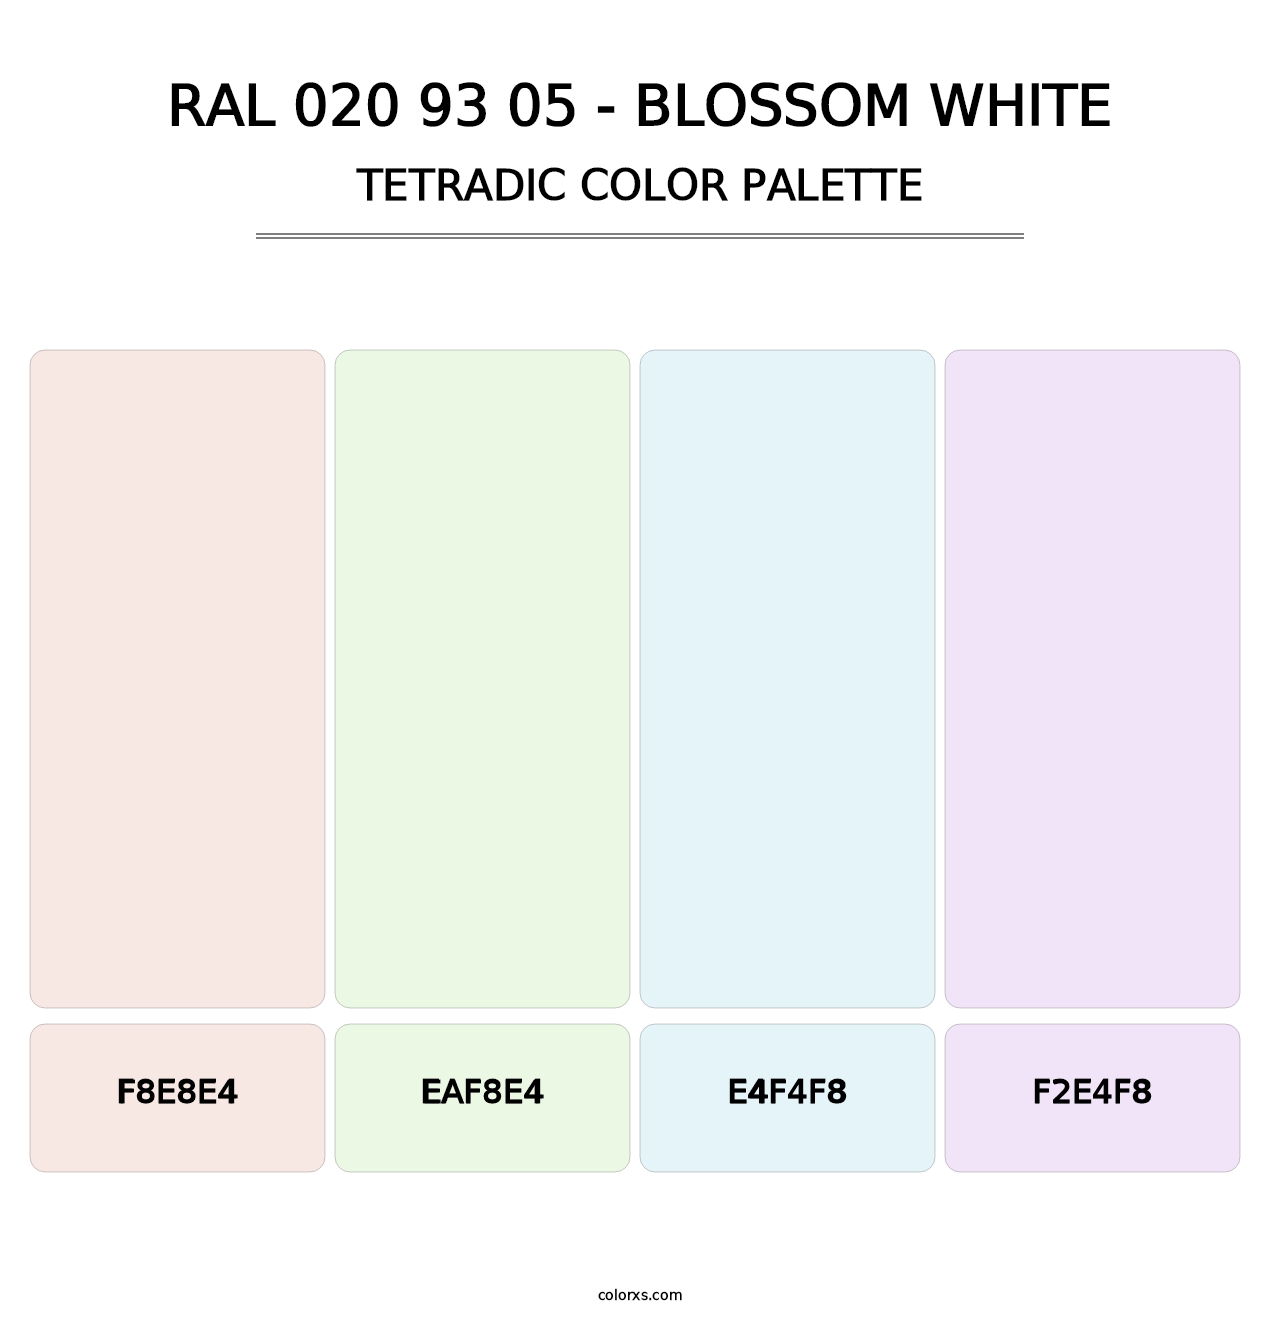 RAL 020 93 05 - Blossom White - Tetradic Color Palette